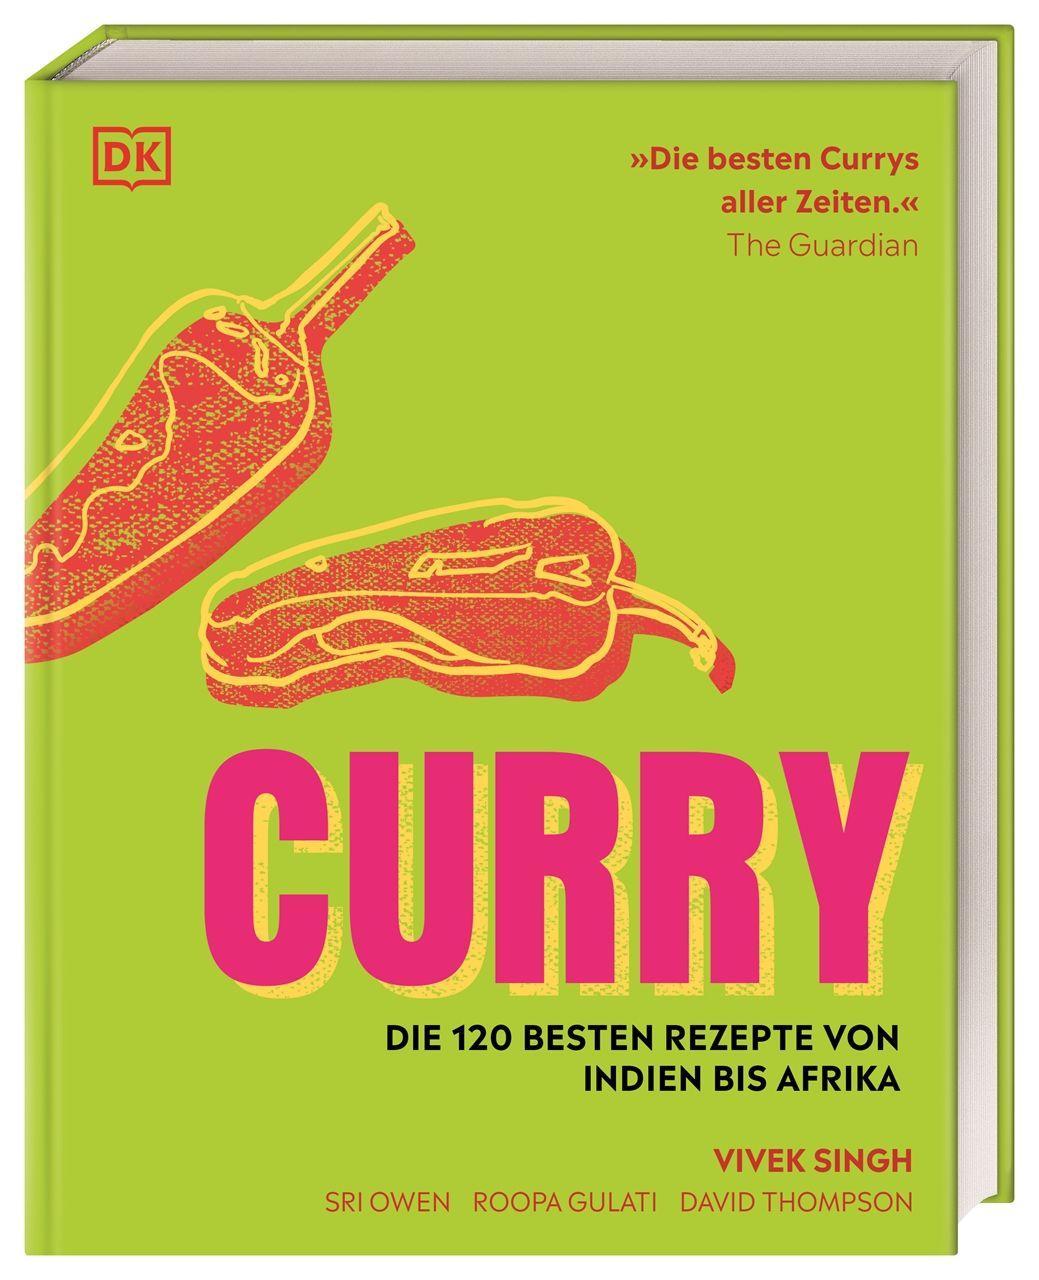 Книга Curry Wiebke Krabbe